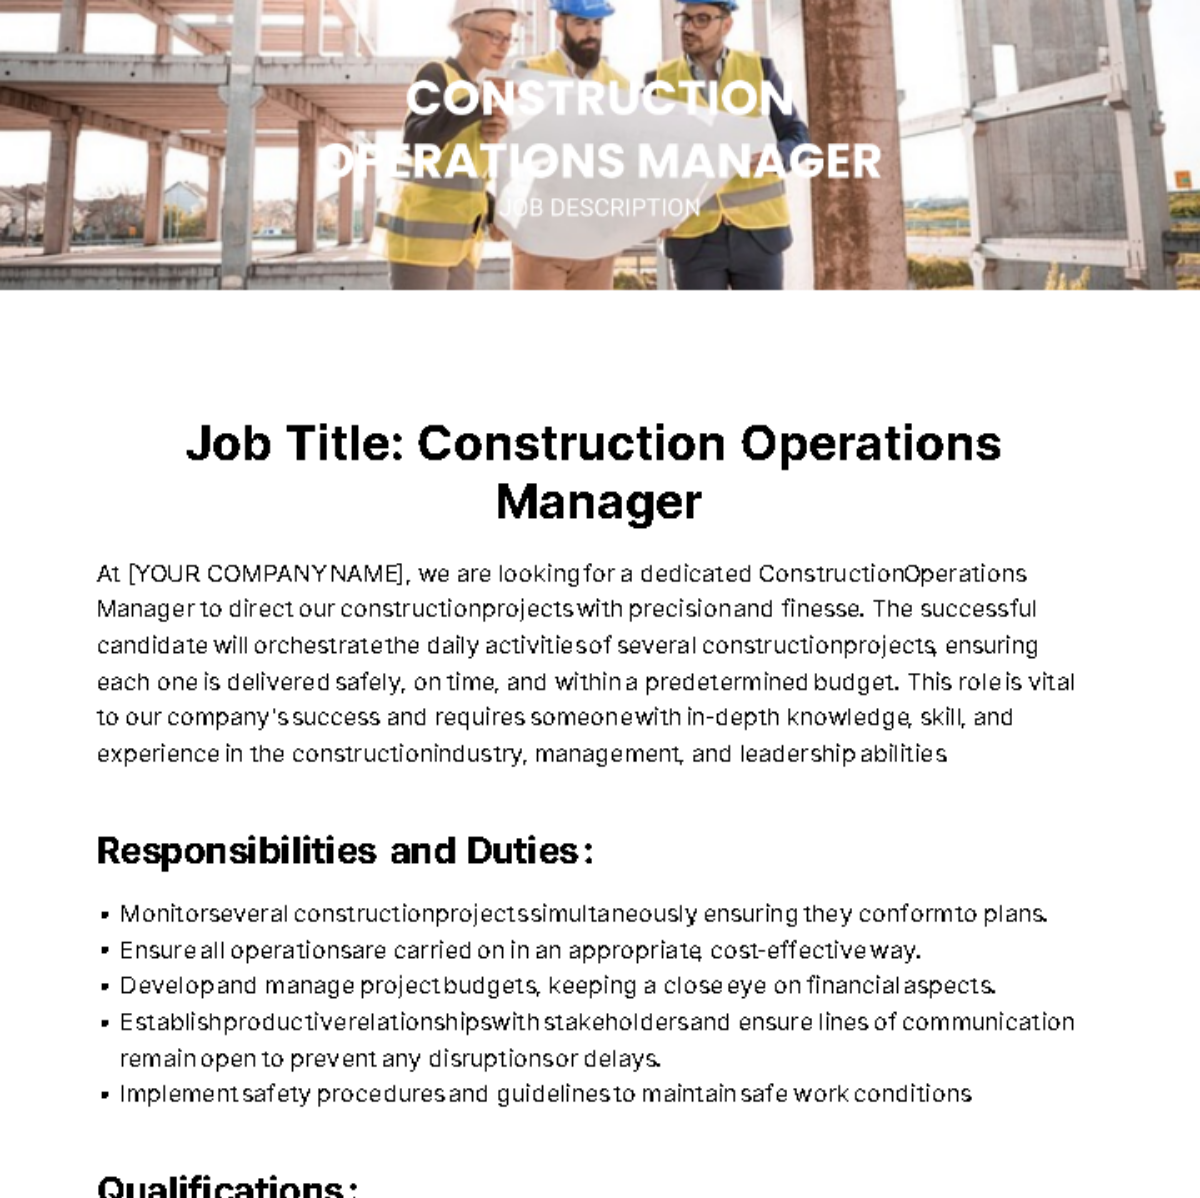 Construction Operations Manager Job Description Template